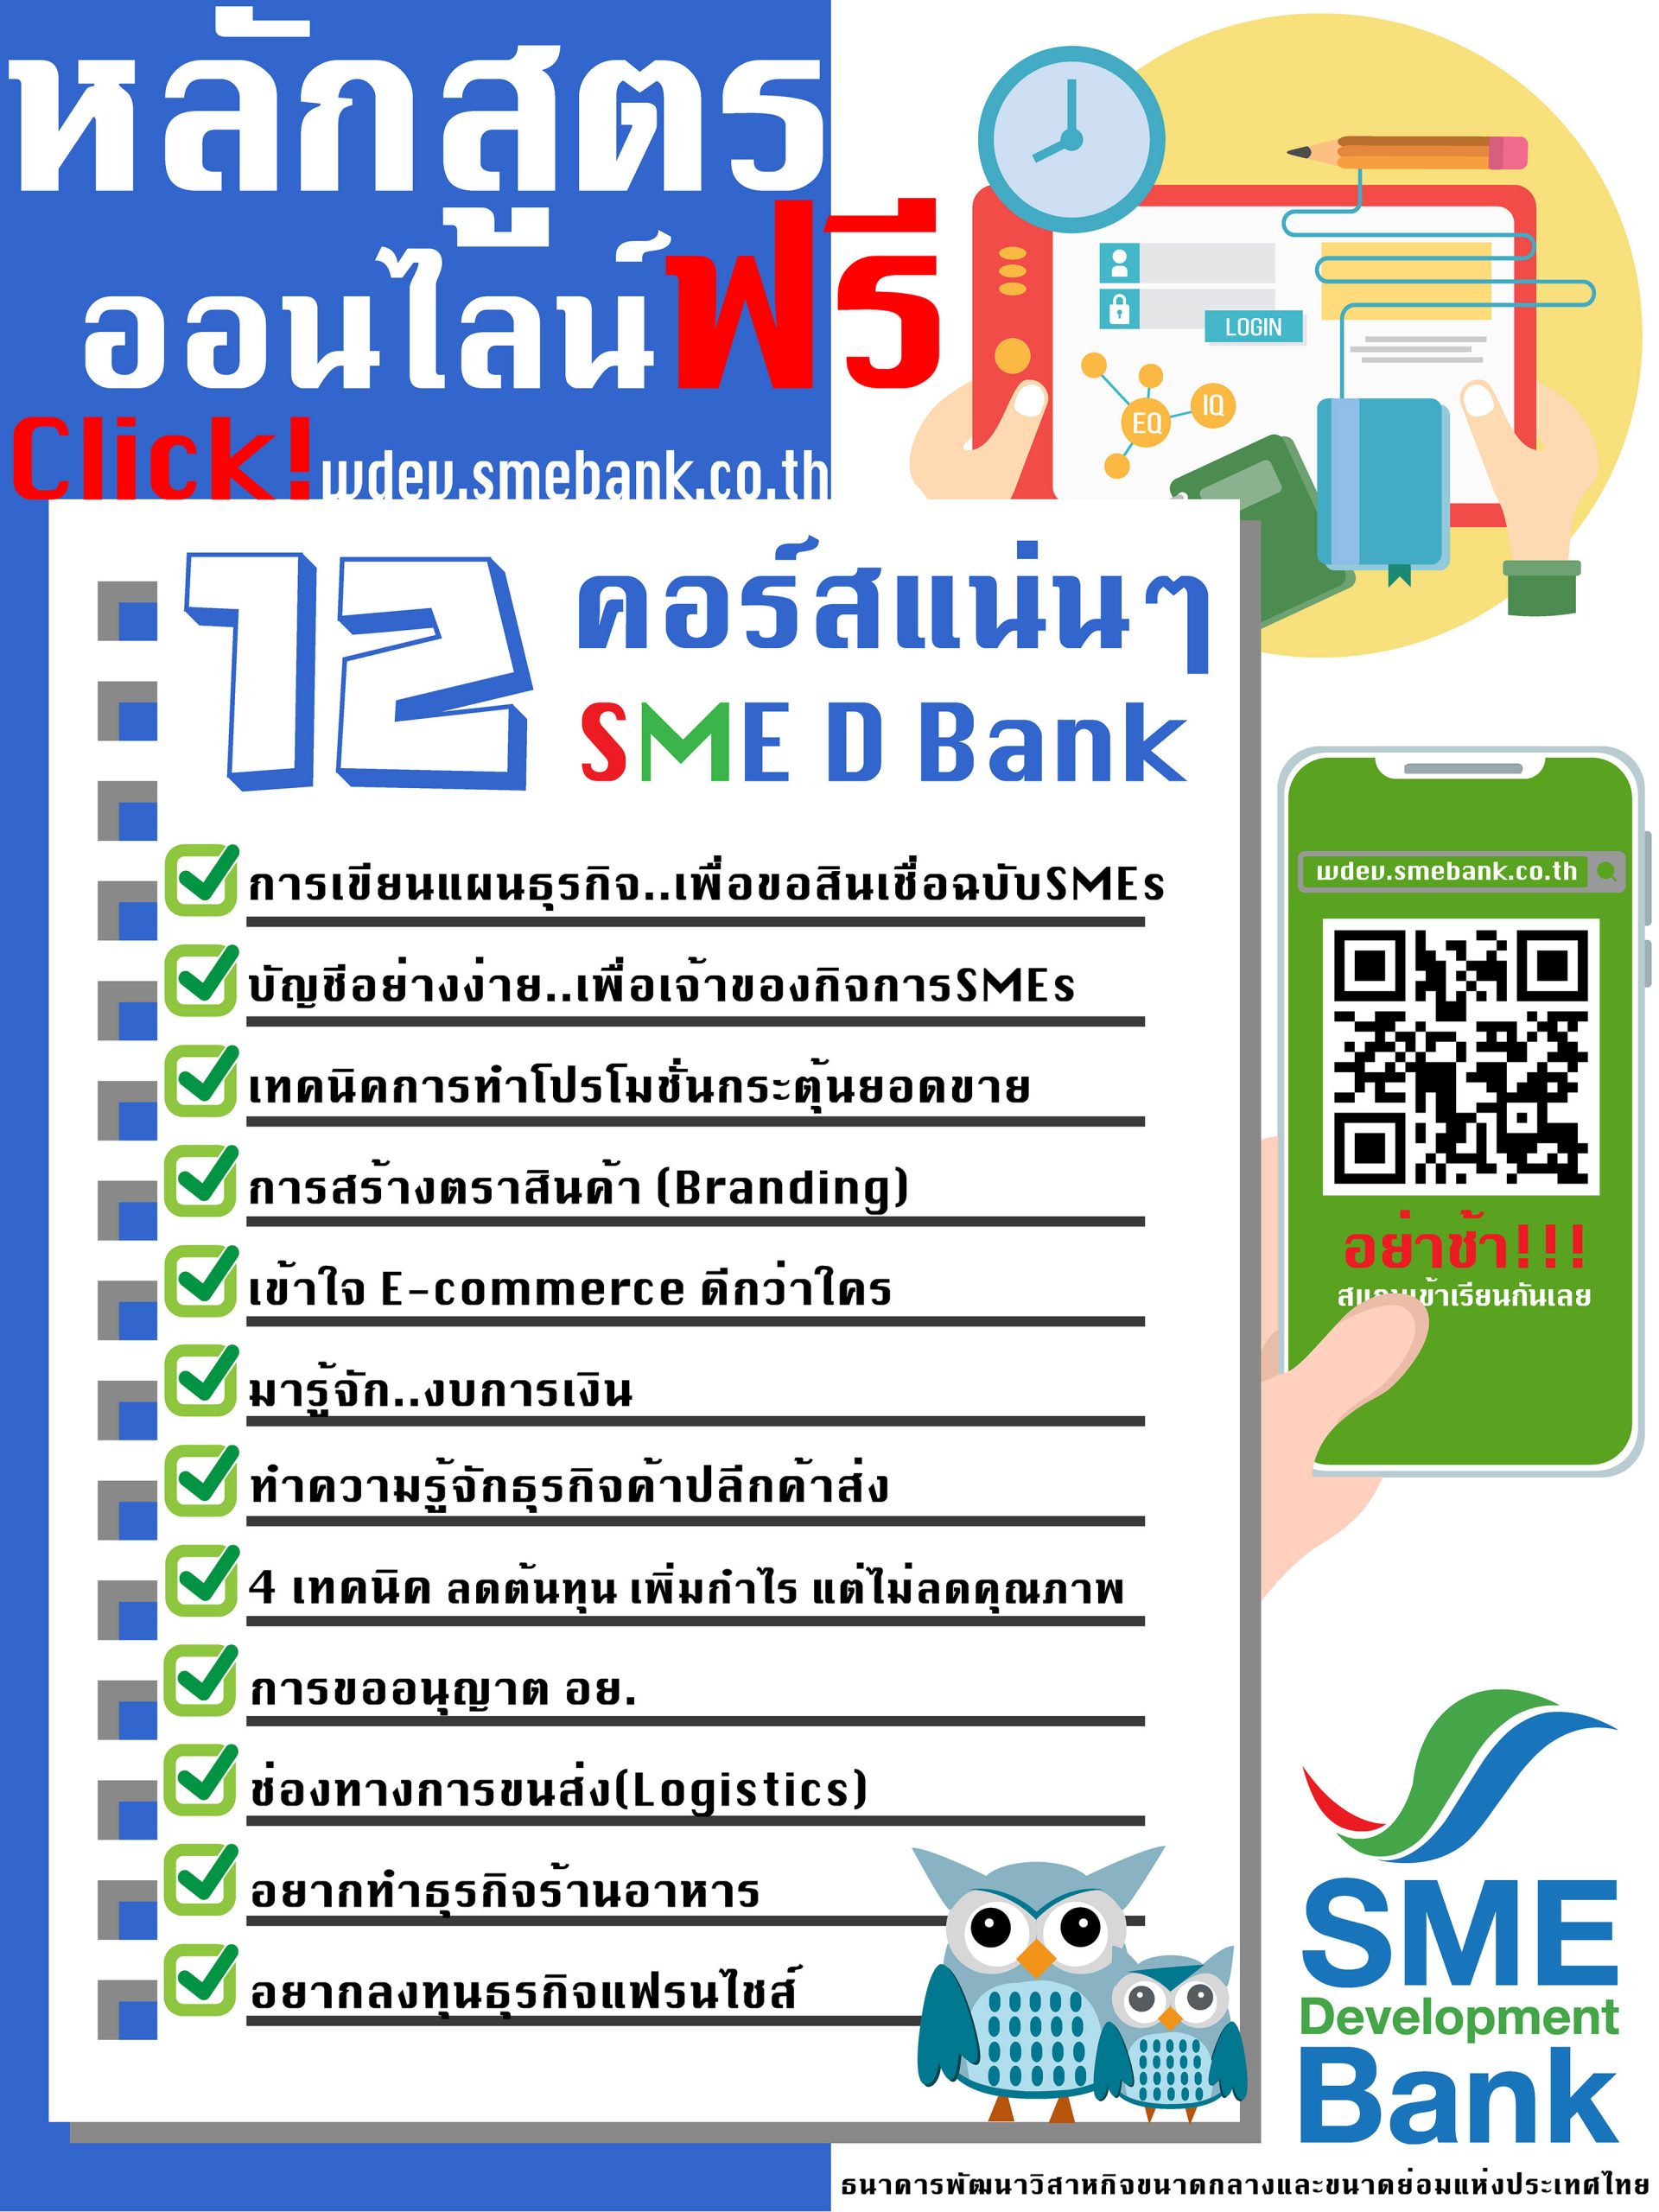 SME D Bank จัดชุดใหญ่ความรู้ฟื้นธุรกิจ เปิด 12 คอร์สออนไลน์ เรียนฟรี! ที่เว็บไซต์ wdev.smebank.co.th